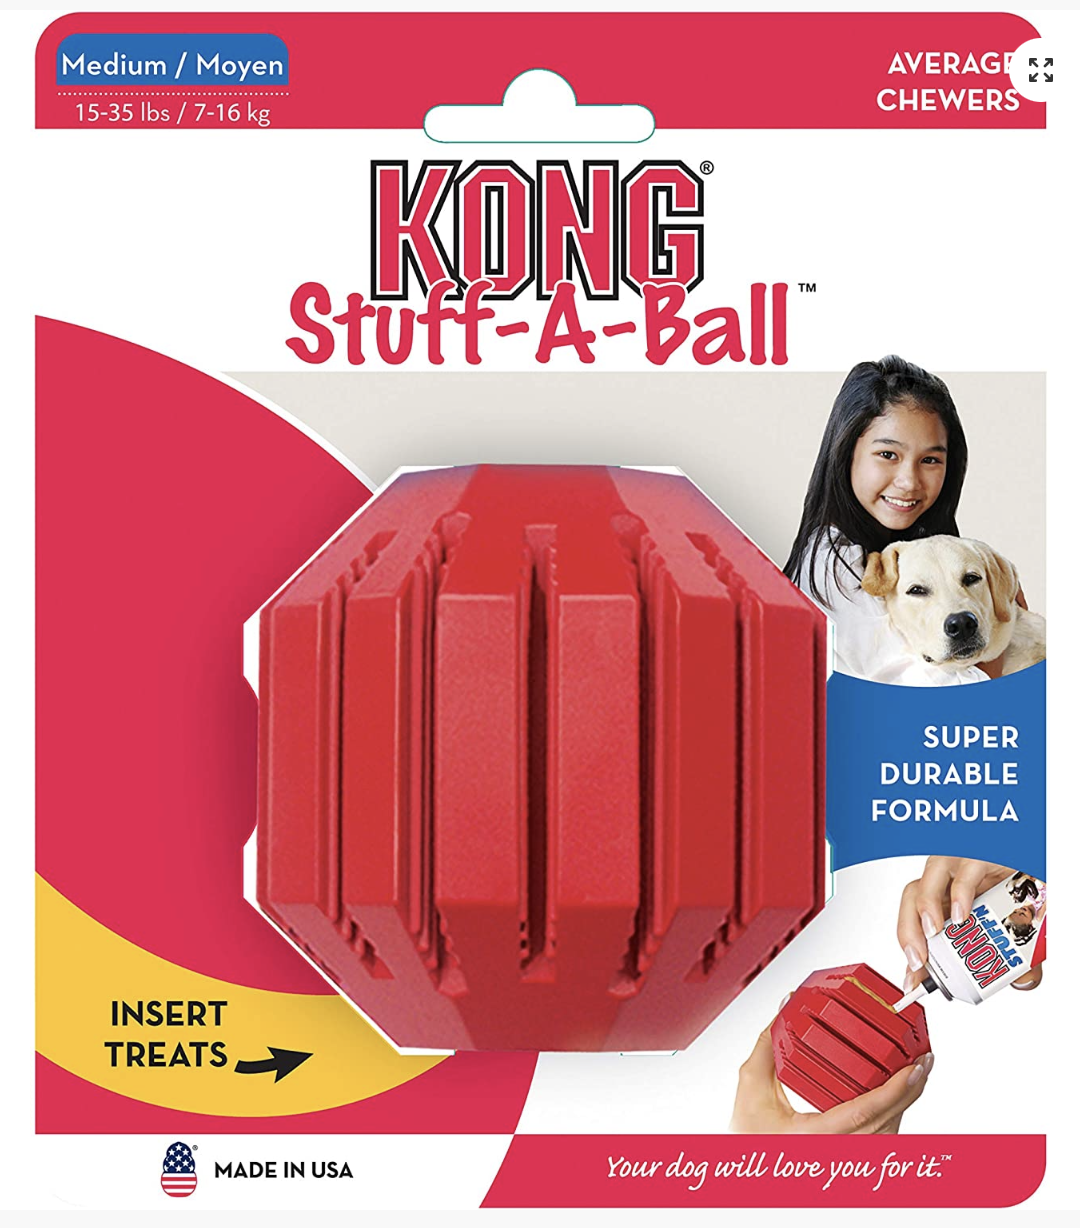 KONG - Stuff A Ball - AARCS DONATION only